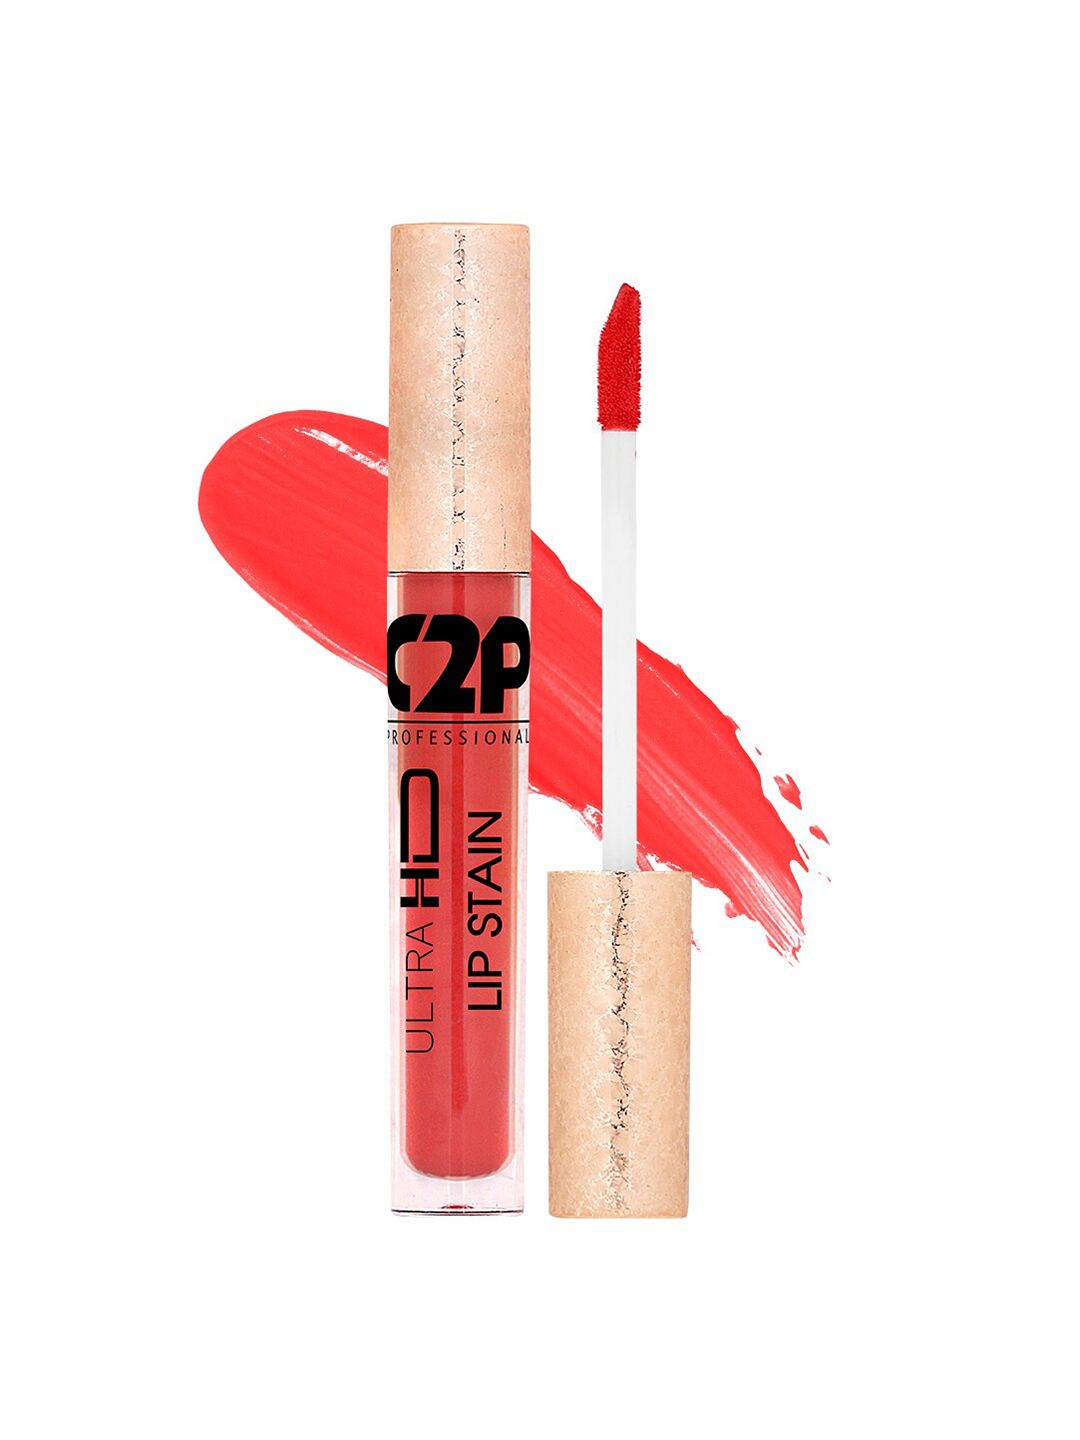 C2P PROFESSIONAL MAKEUP Lip Stain Liquid Lipstick - Smooth Smoochie 16 5ml Price in India